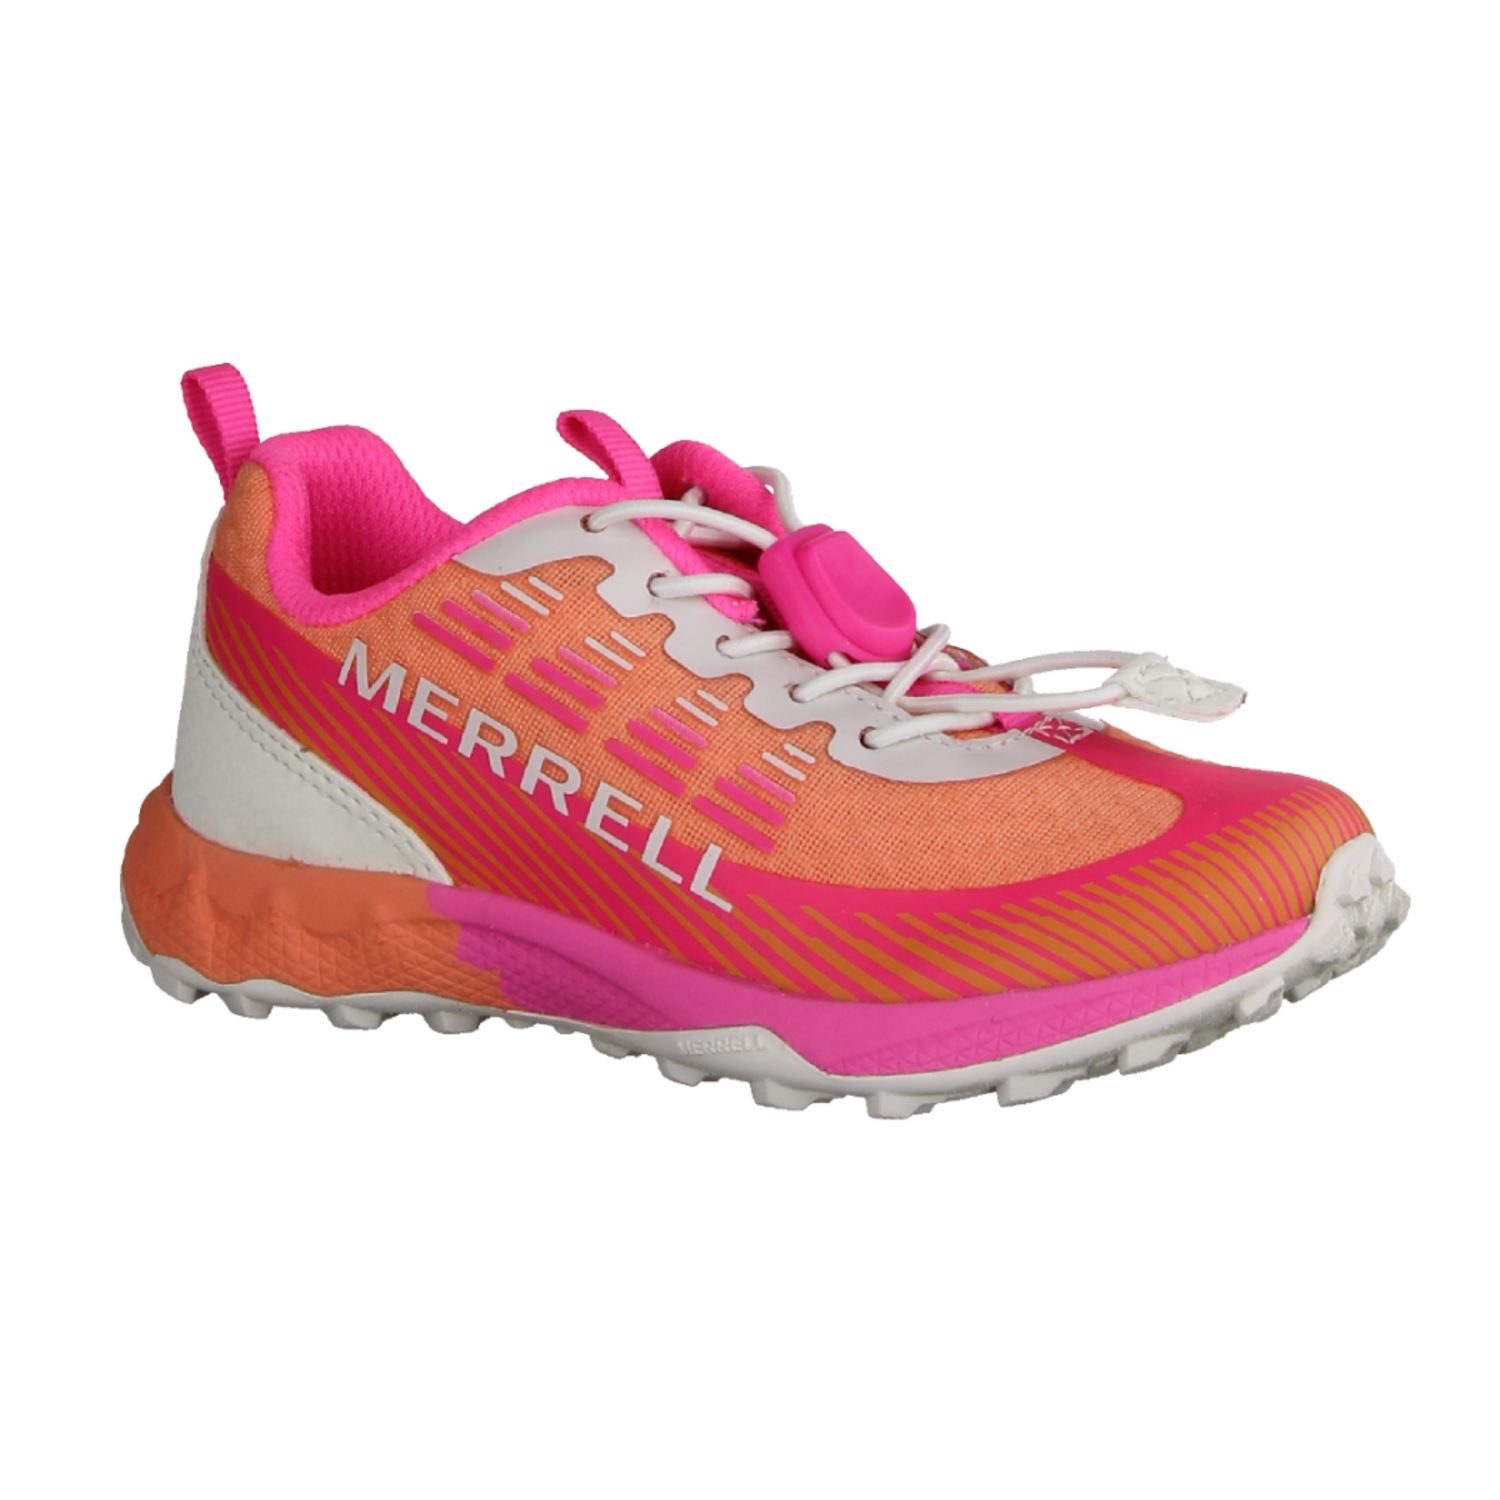 Merrell Agility Peak Mädchenschuhe, Barfußschuh, Sneaker, Textil,Pink/Orange